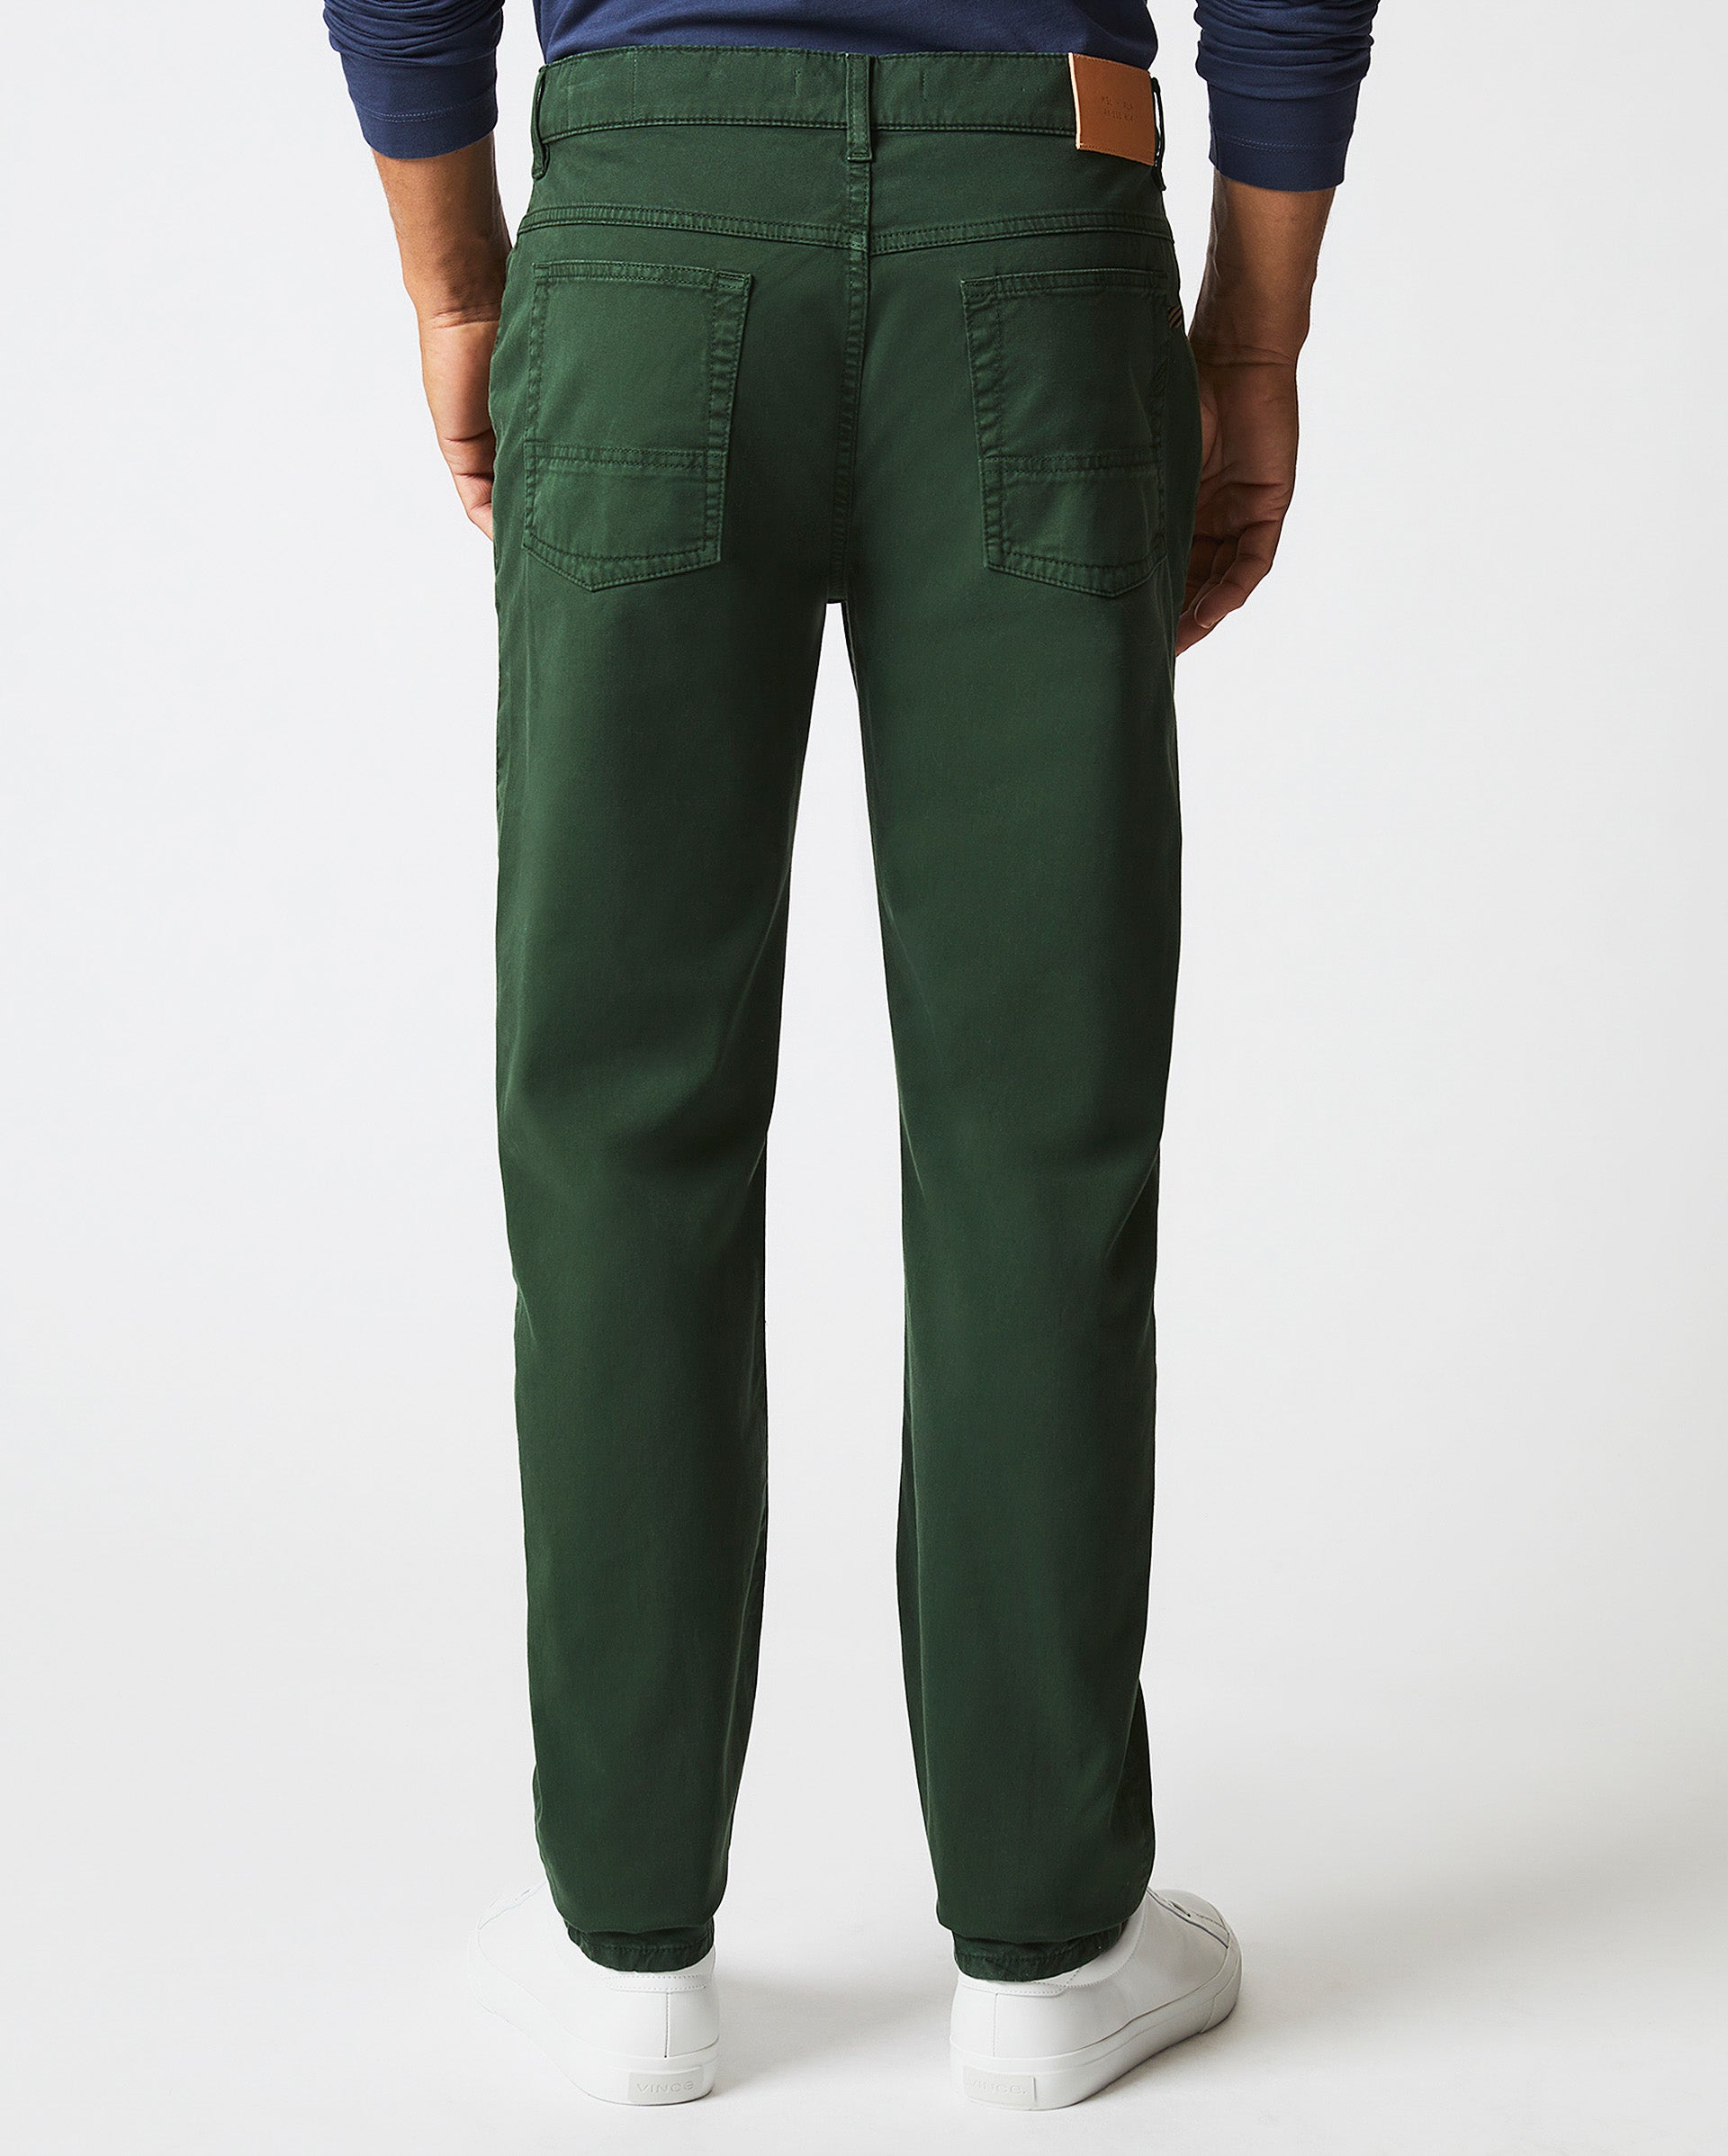 Billy Belt Olive Green Cargo Pants –